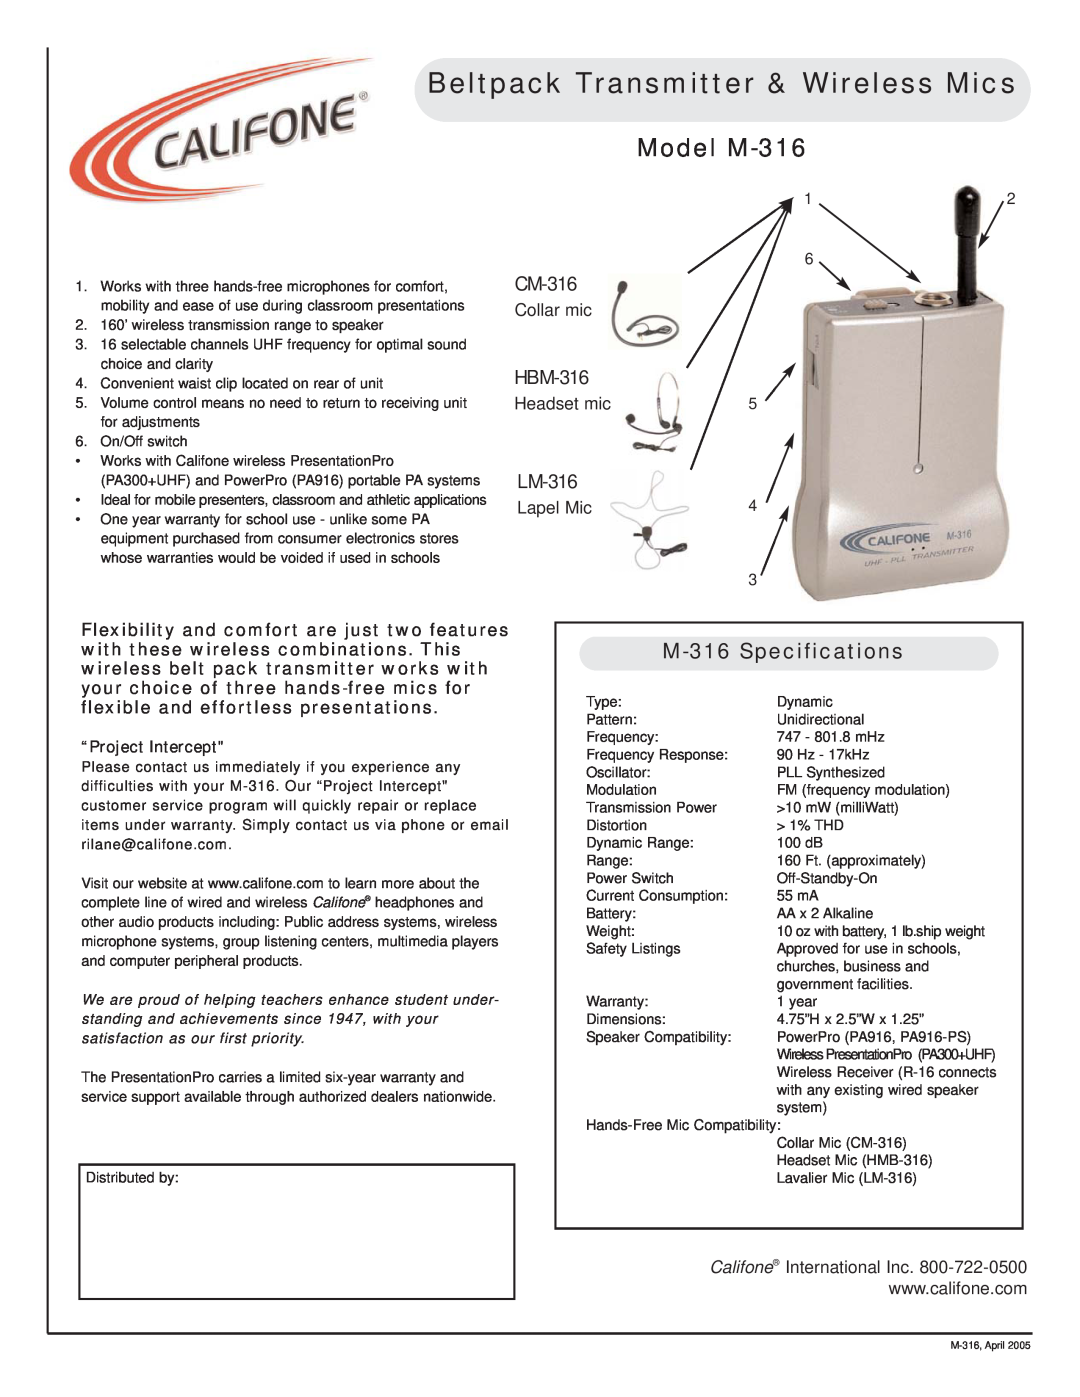 Califone specifications Beltpack Transmitter & Wireless Mics, Model M-316, CM-316, Collar mic, HBM-316, Headset mic 